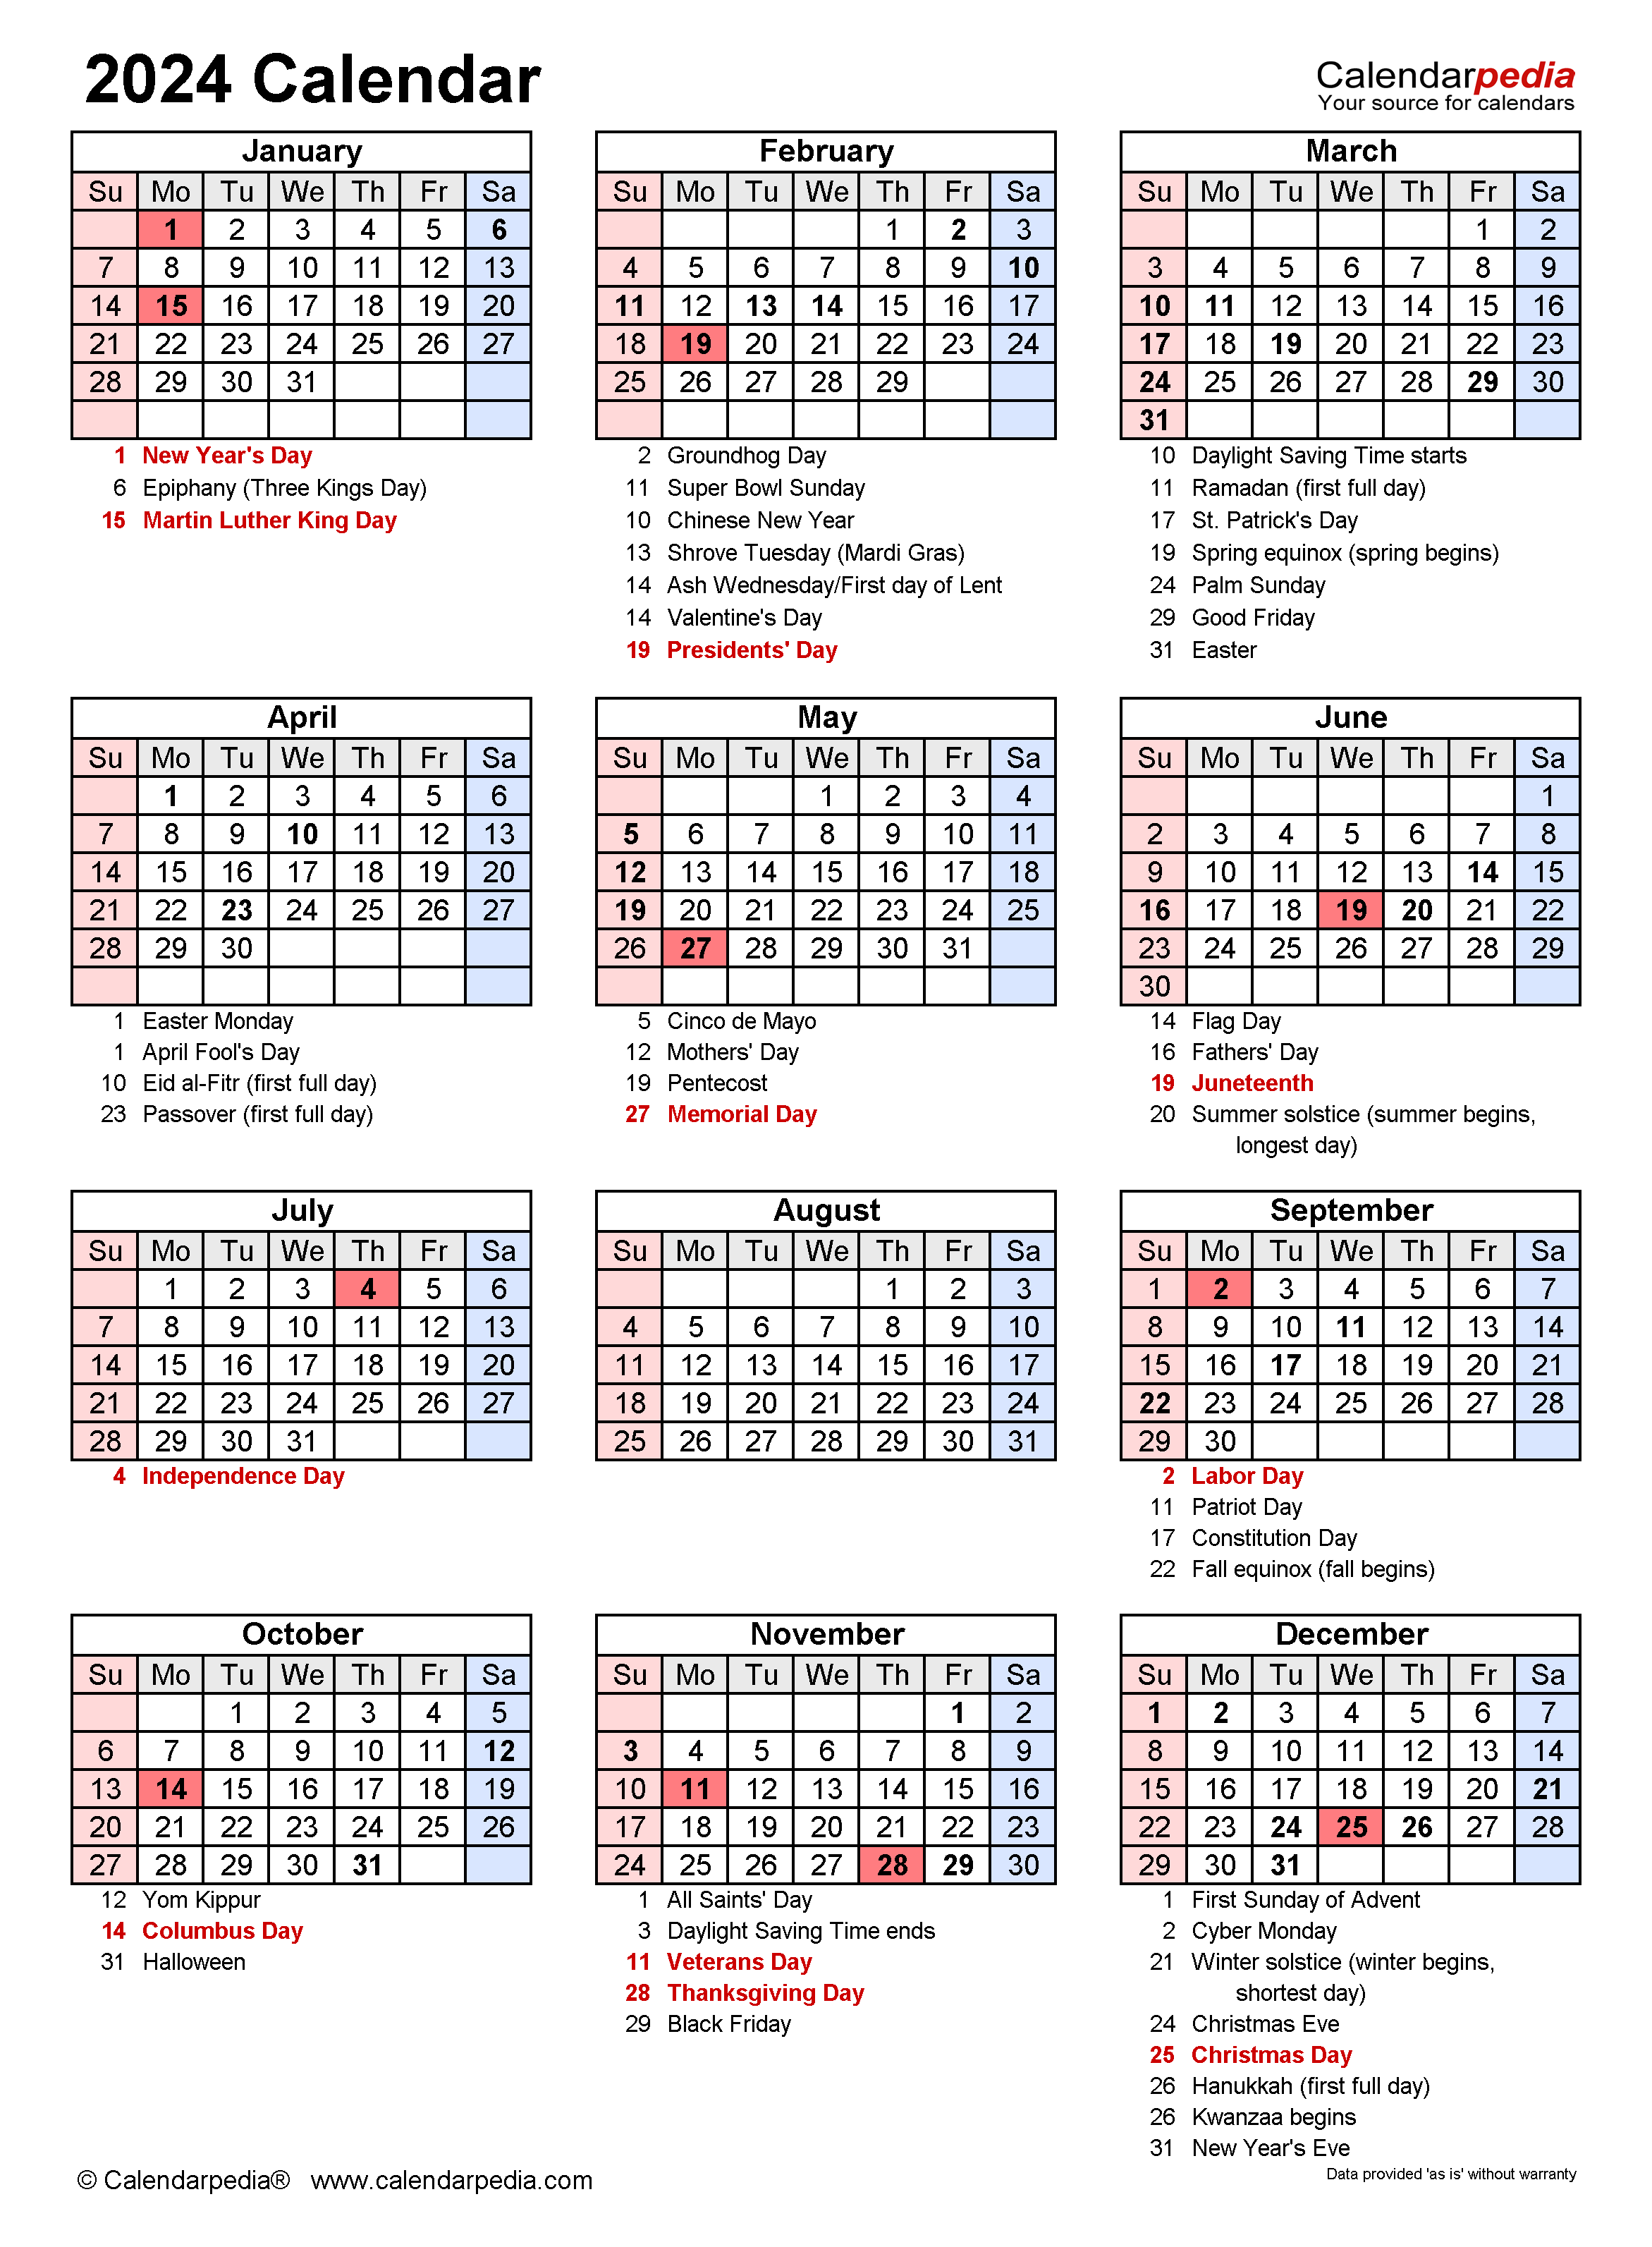 2024 Calendar Free Printable PDF Templates Calendarpedia - Free Printable 2024 Calendar With Holidays Trinidad